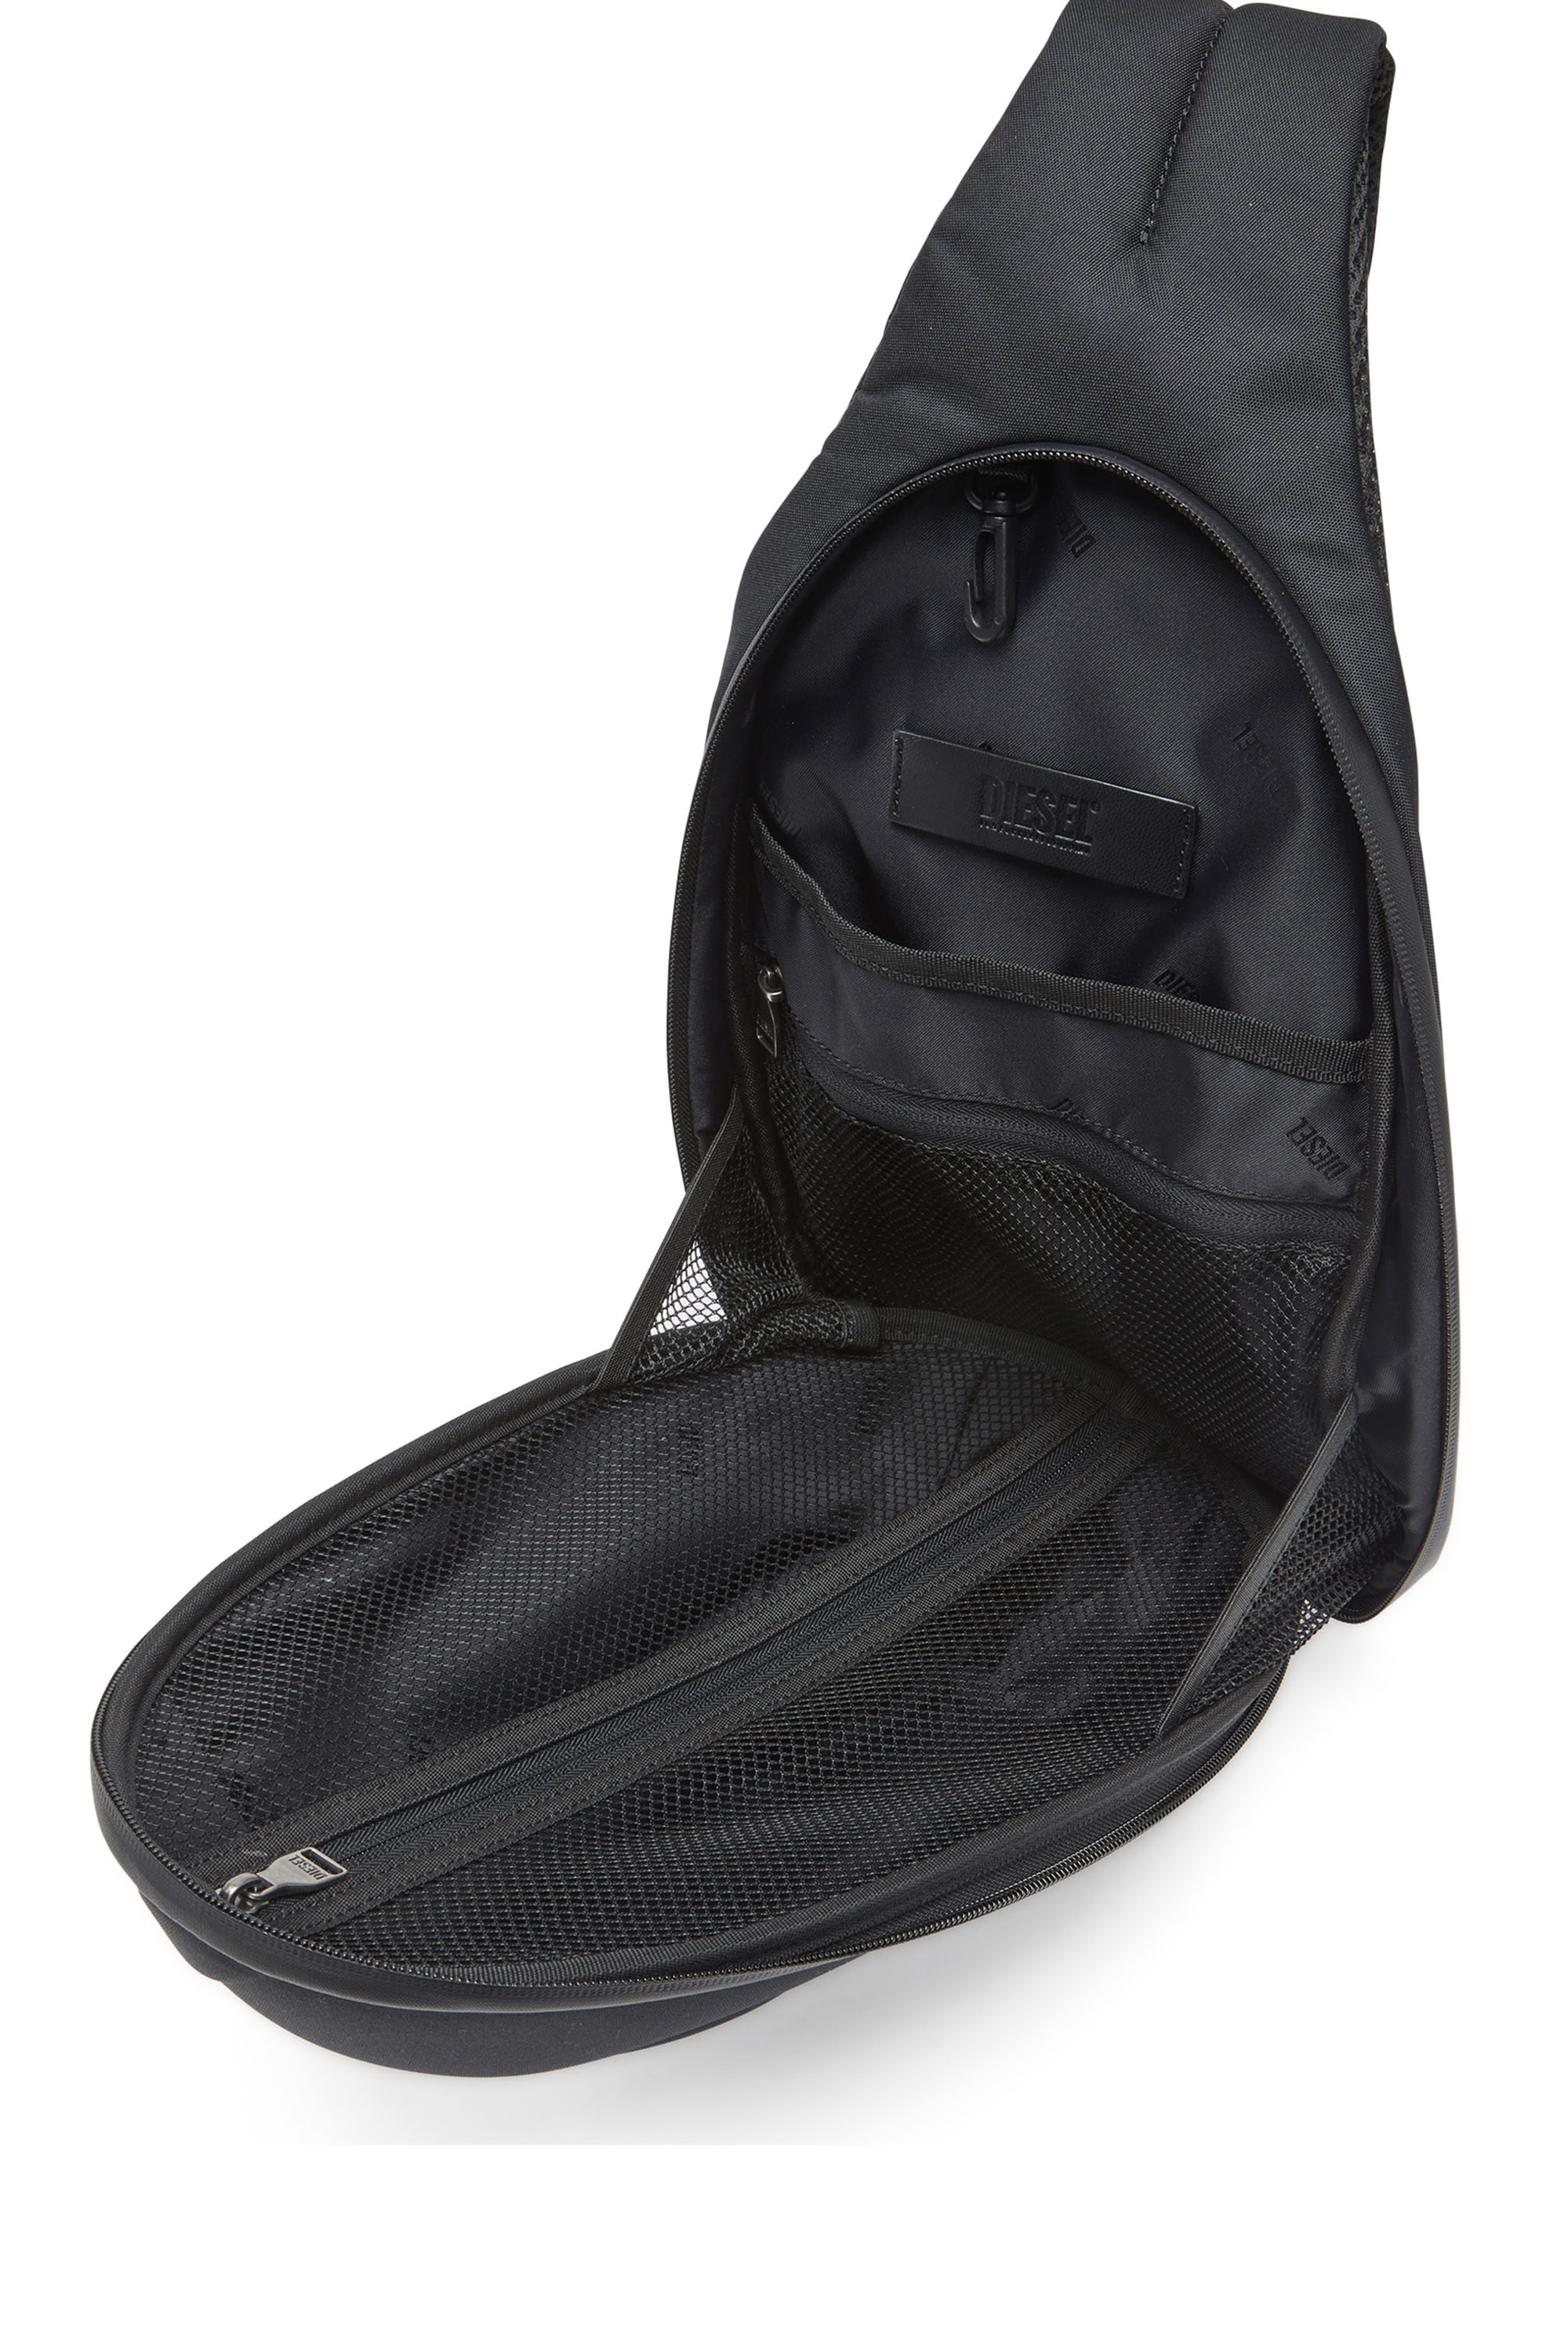 Men's 1DR-Pod Sling Bag - Hard shell sling bag | 1DR-POD SLING BAG 